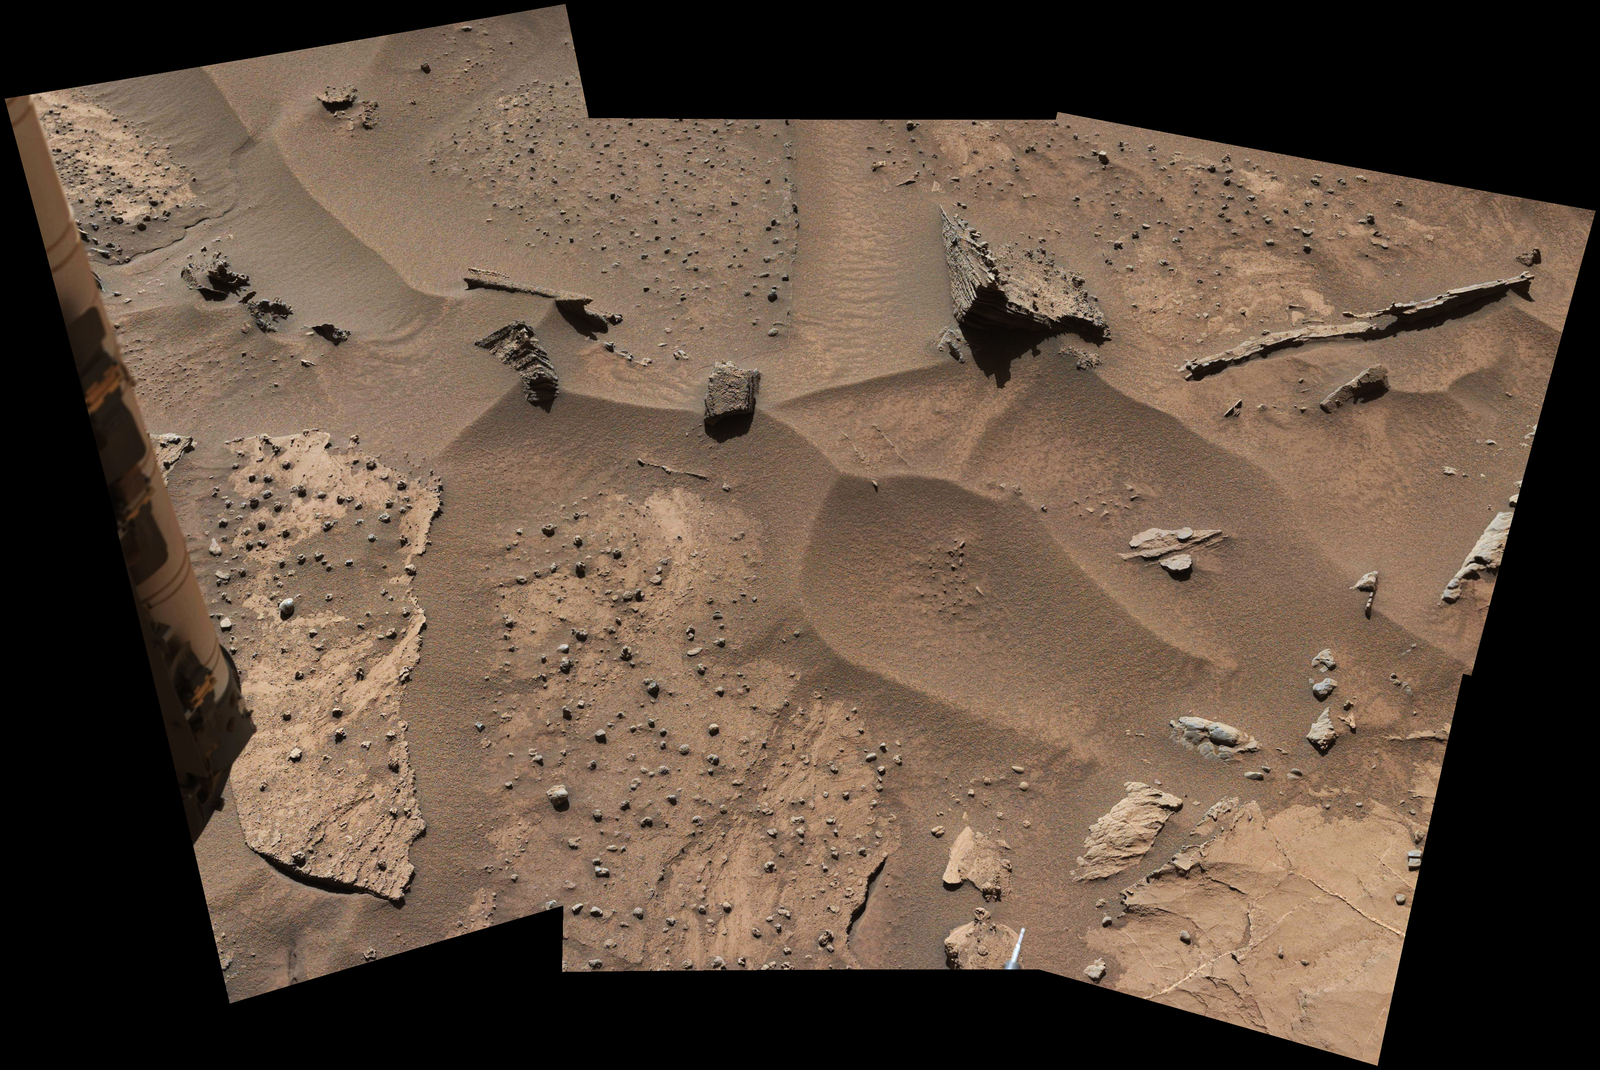 Knobbly Textured Sandstone on Mount Sharp, Mars